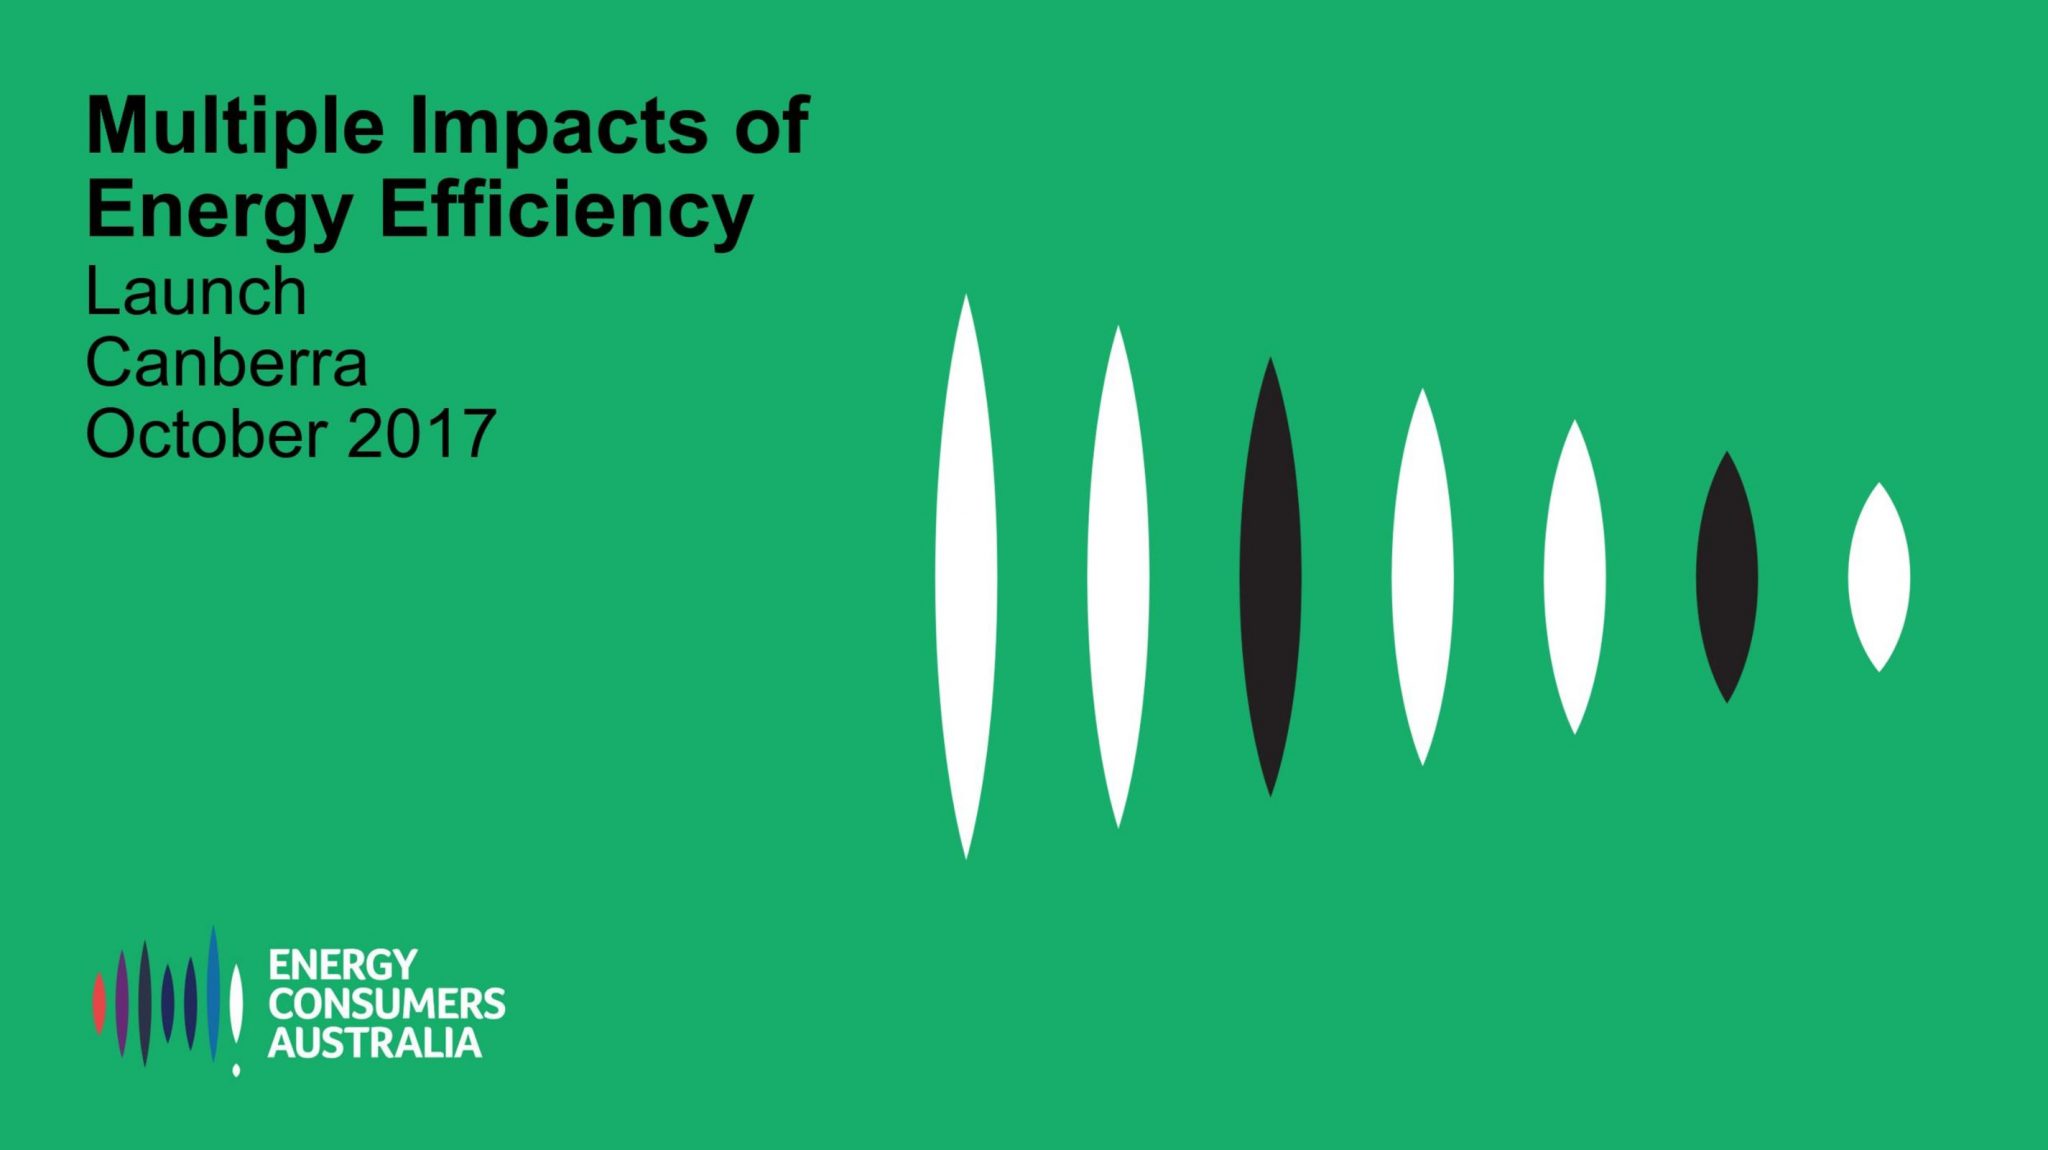 Multiple Impacts of Energy Efficiency: ACIL Allen